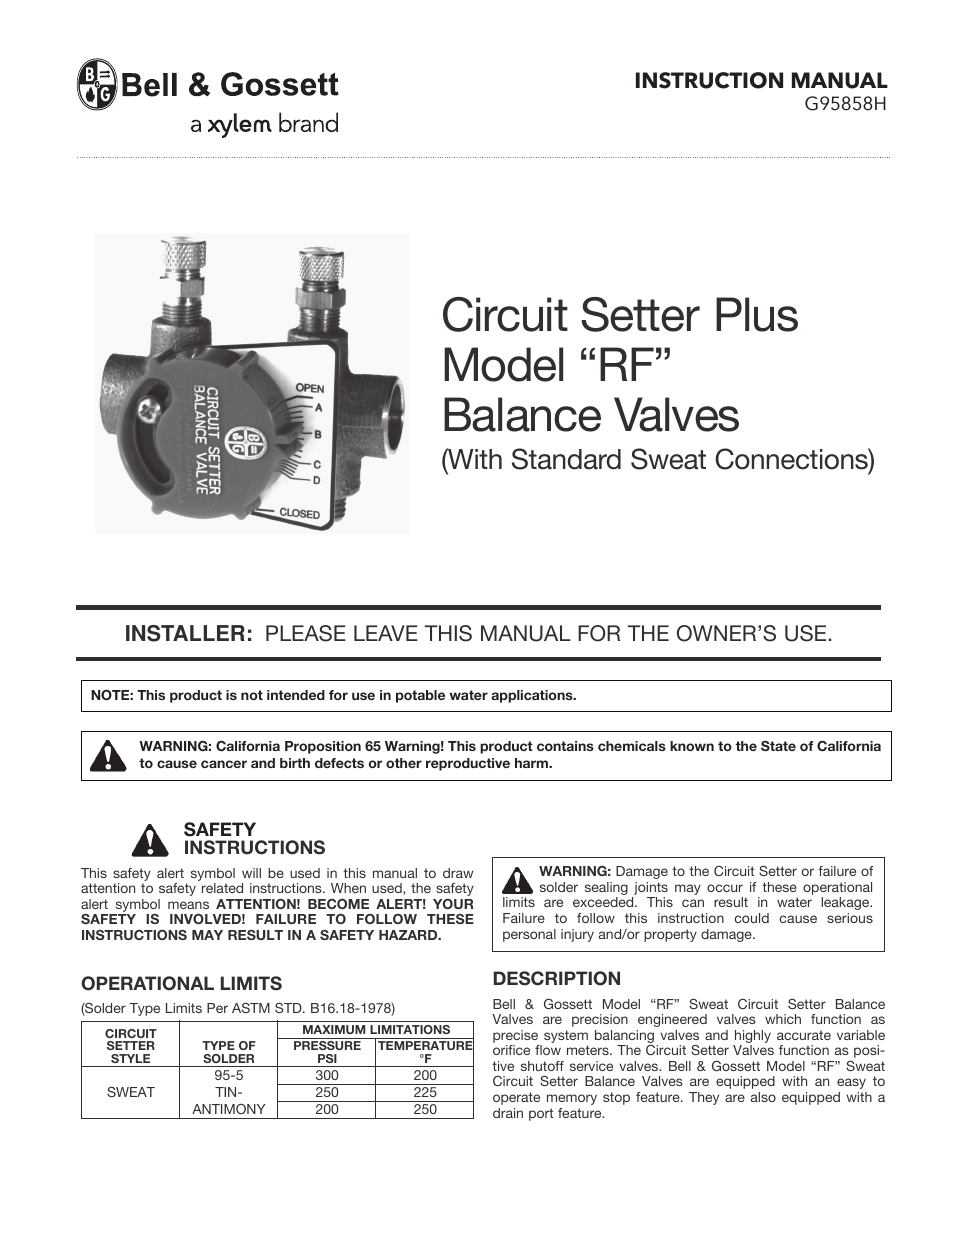 G95858H Circuit Setter Plus “RF” Balance Valves